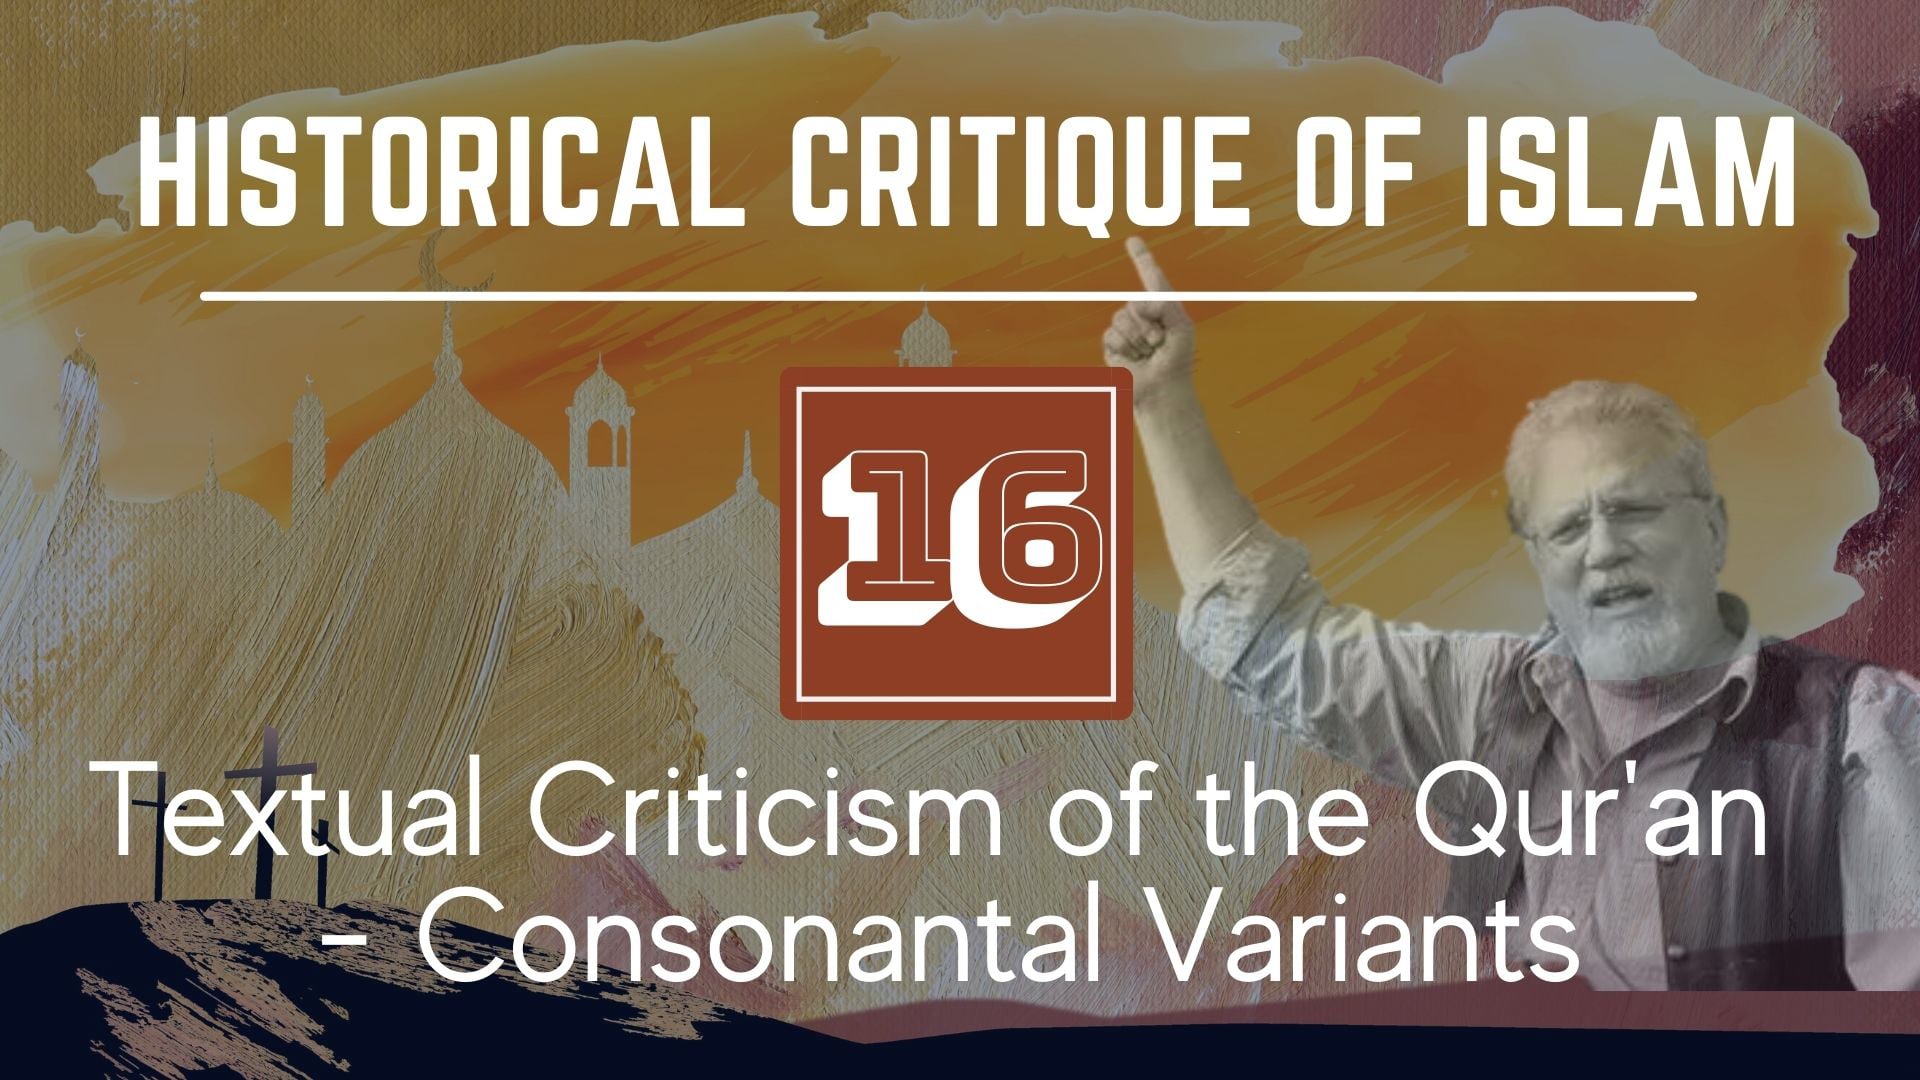 Historical Critique of Islam – Textual Criticism of the Qur’an – Consonantal Variants